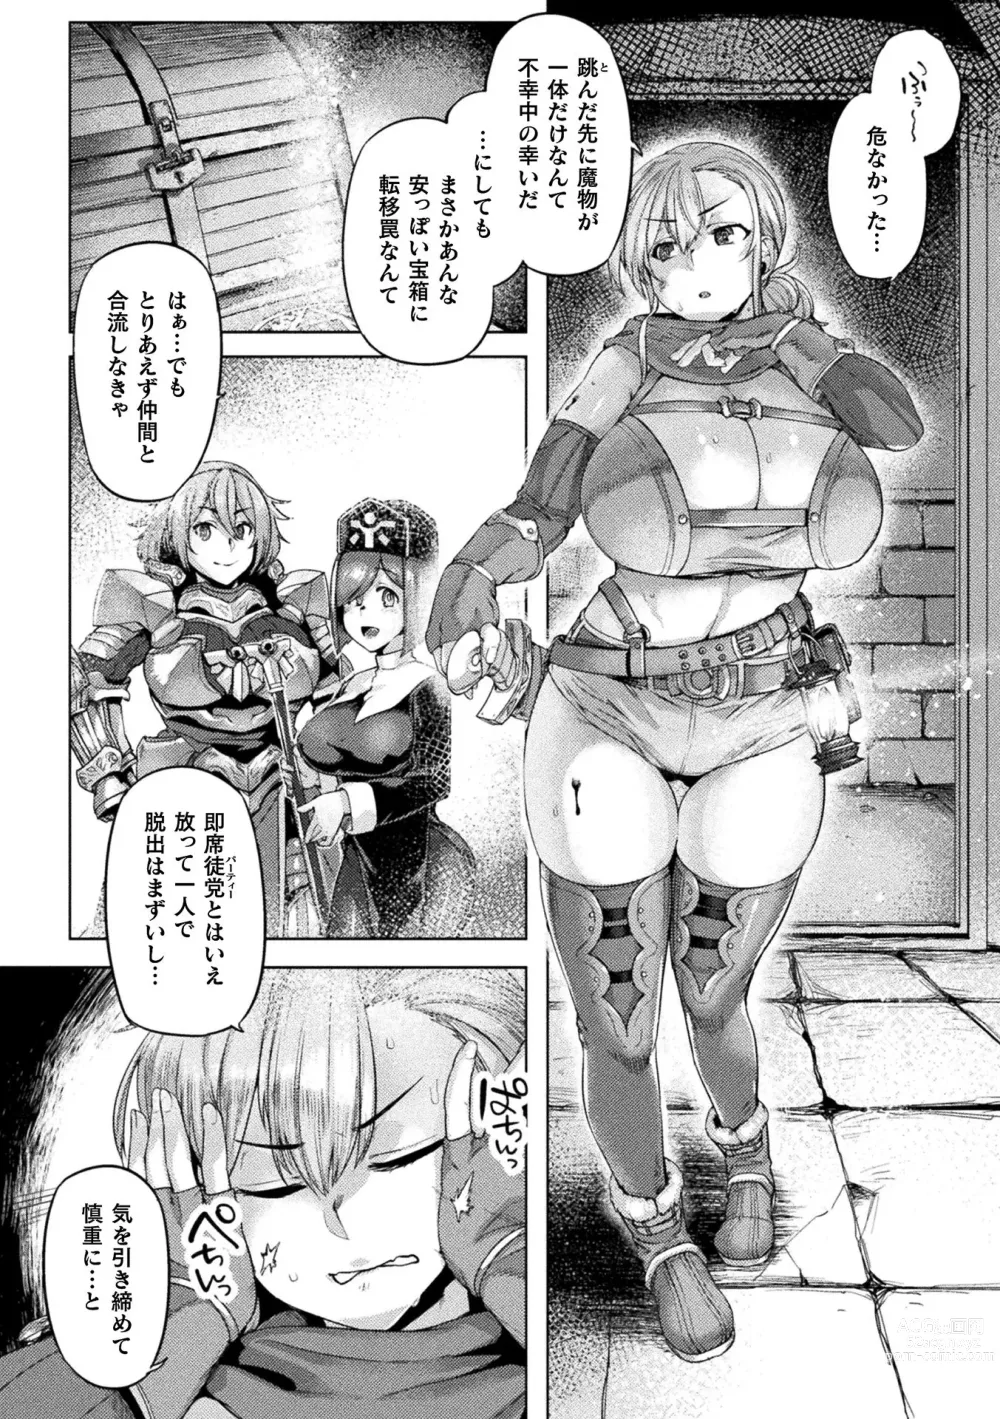 Page 6 of manga Kusshita Otome ga Ochiru Koro - When a surrendered maiden becomes sexually degraded